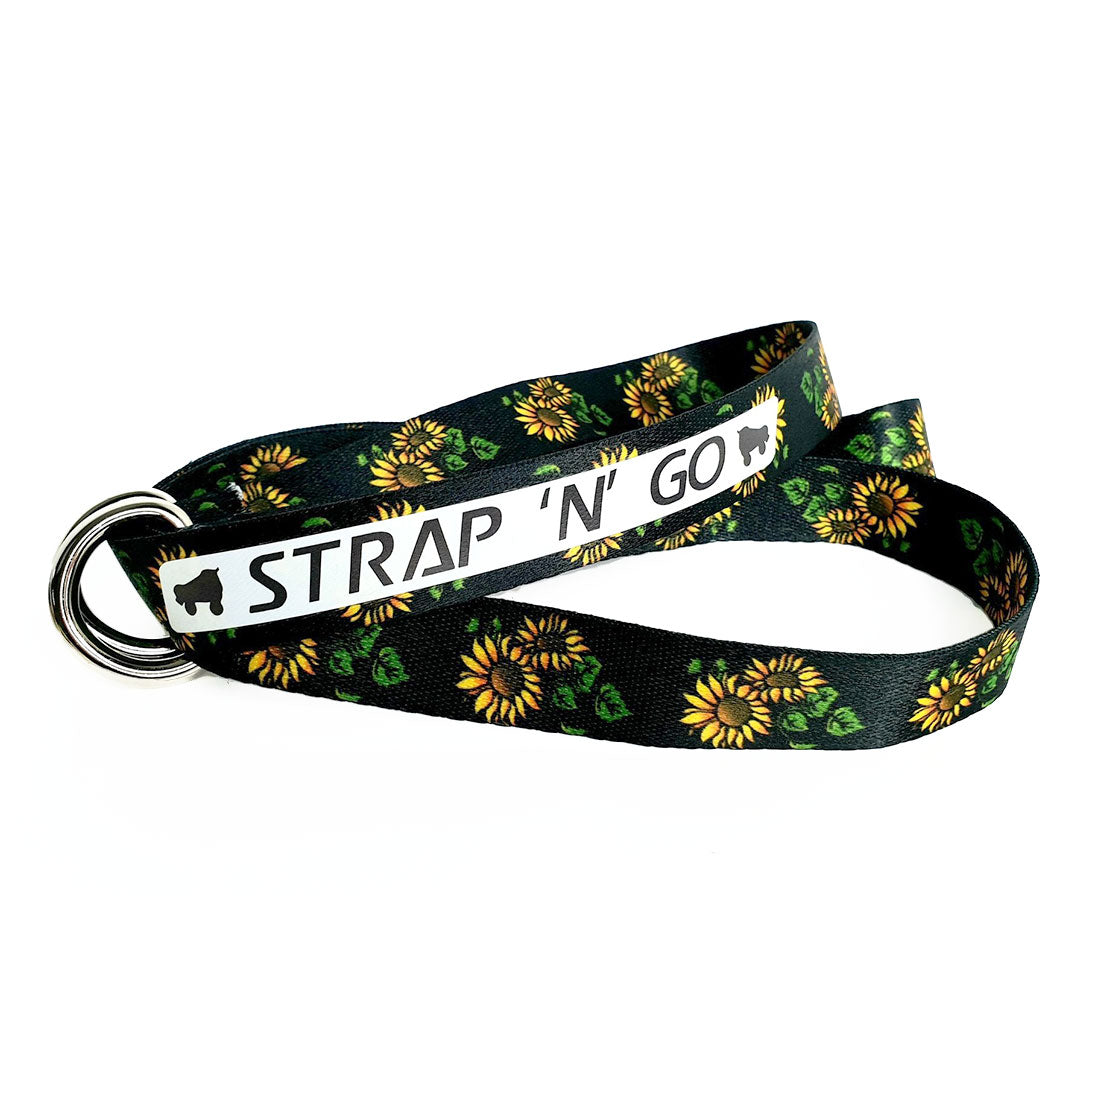 Strap N Go Skate Noose/Leash - Patterns Sunflower Roller Skate Accessories